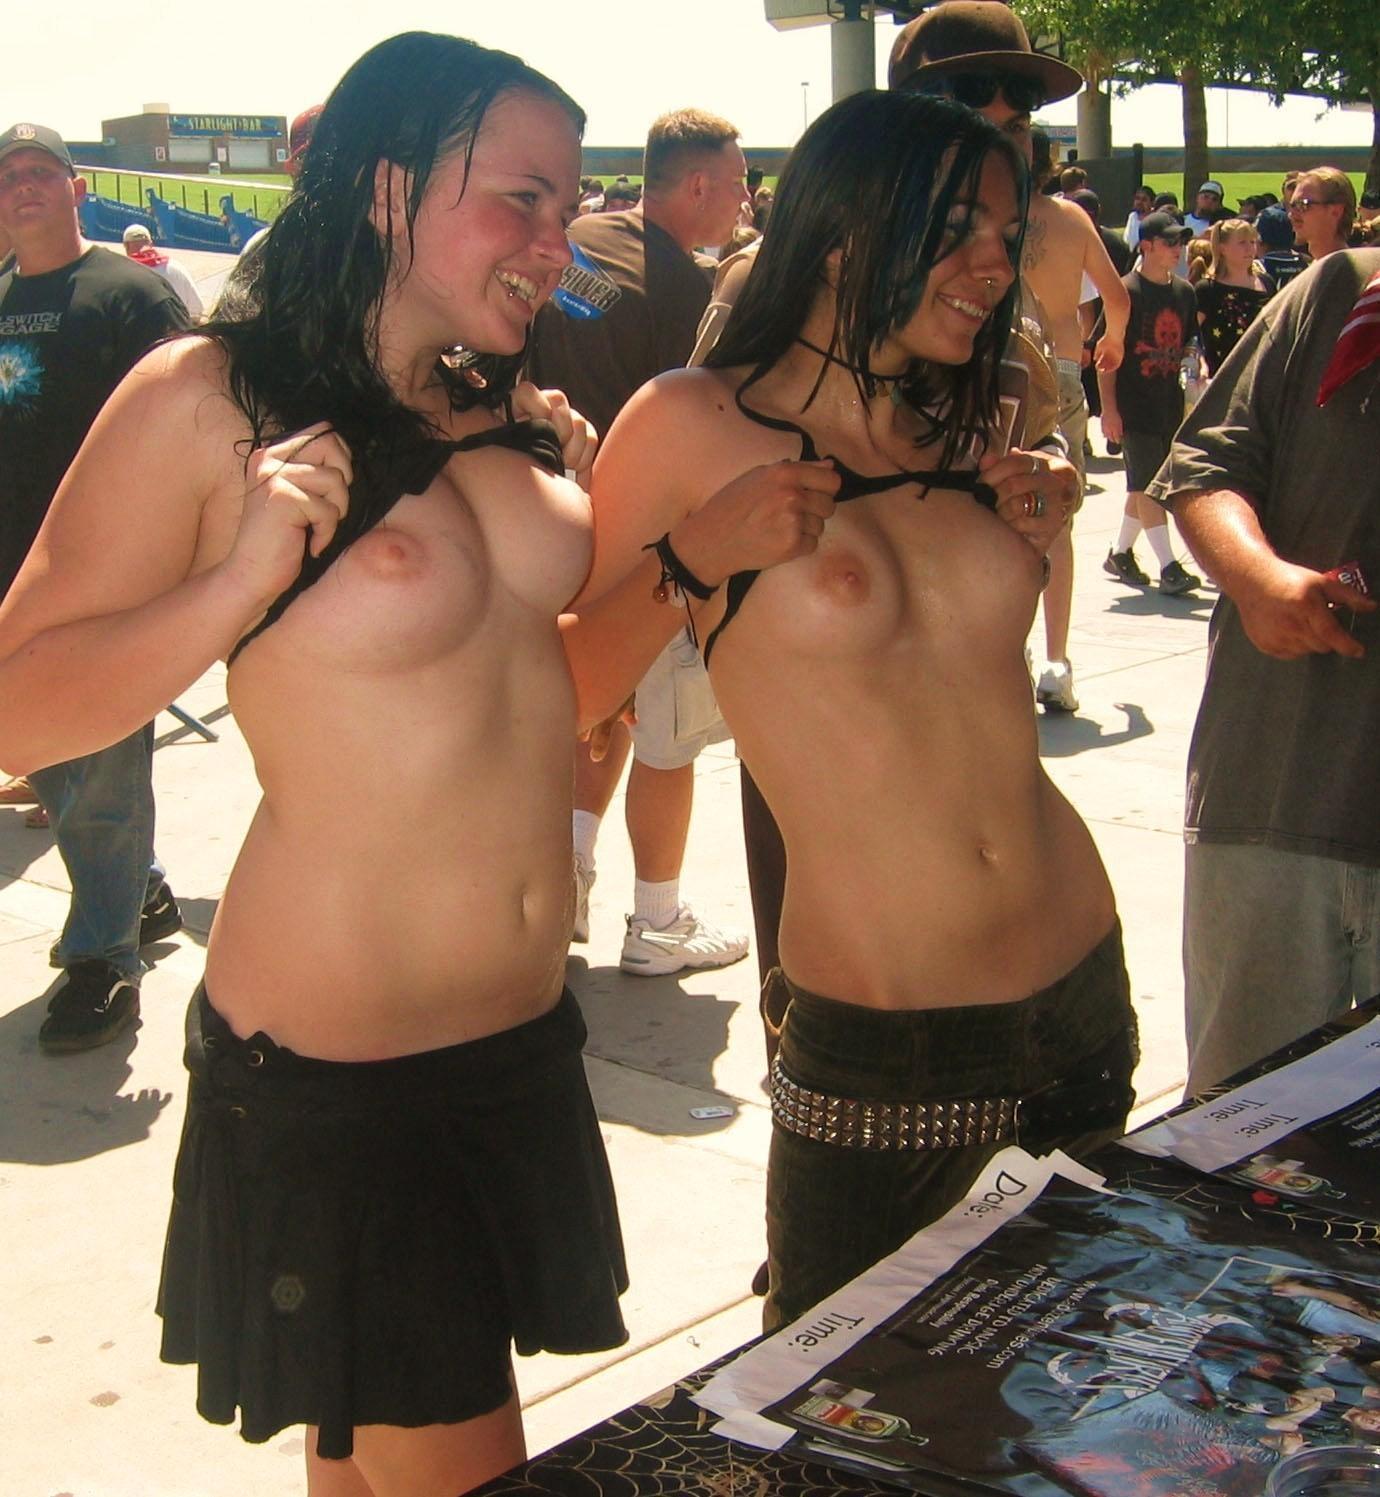 Ozzfest girls flashing for free stuff Porn Pic - EPORNER